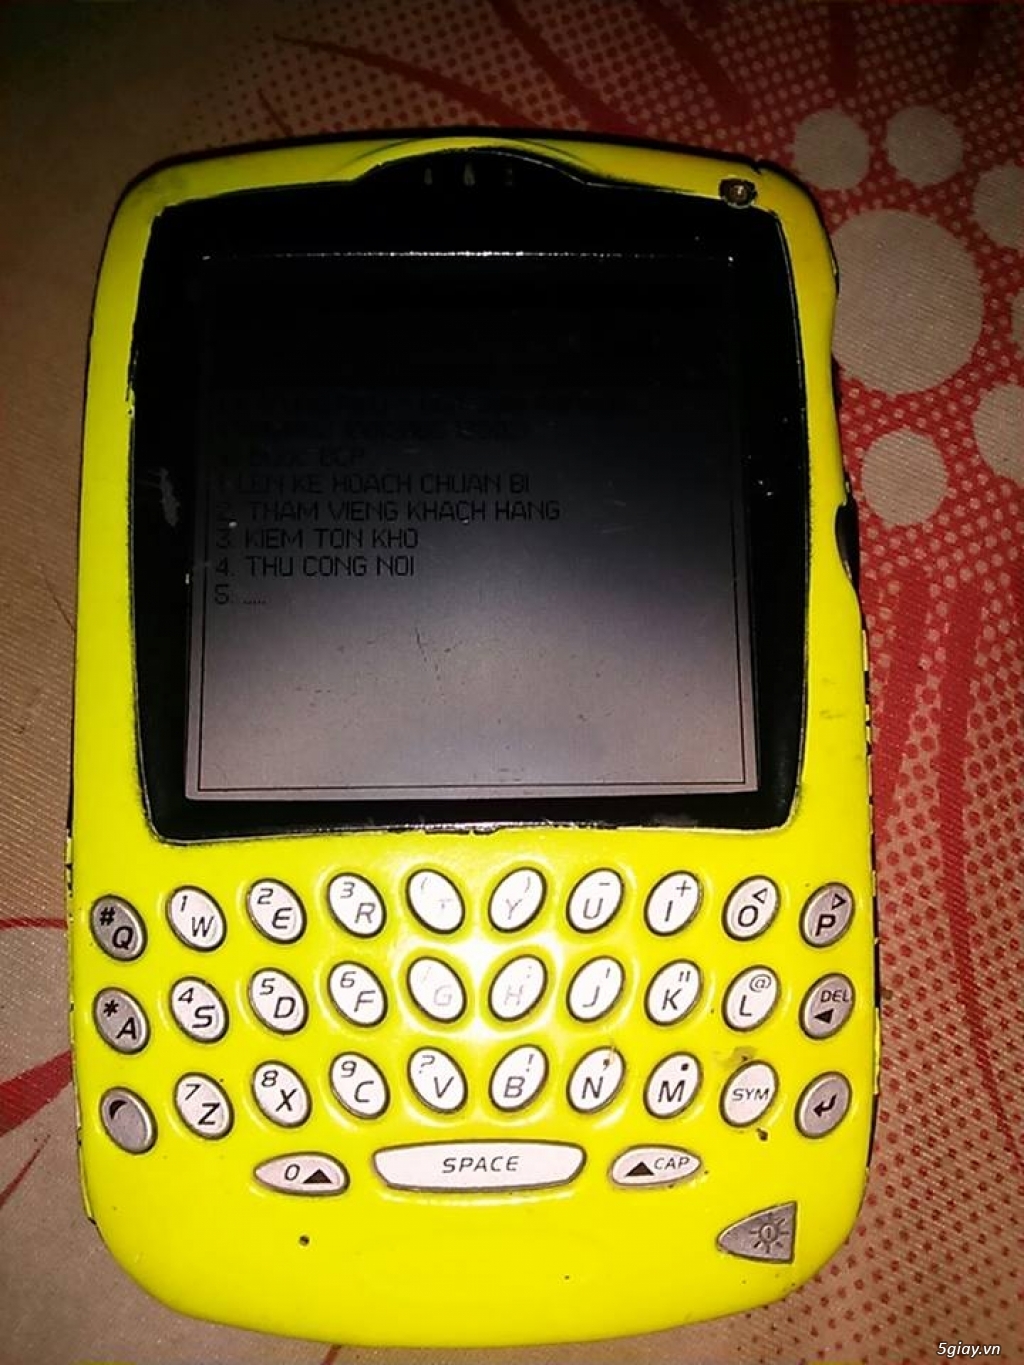 blackberry 6710,7290,8100,8300 lỗi nhẹ giá xác